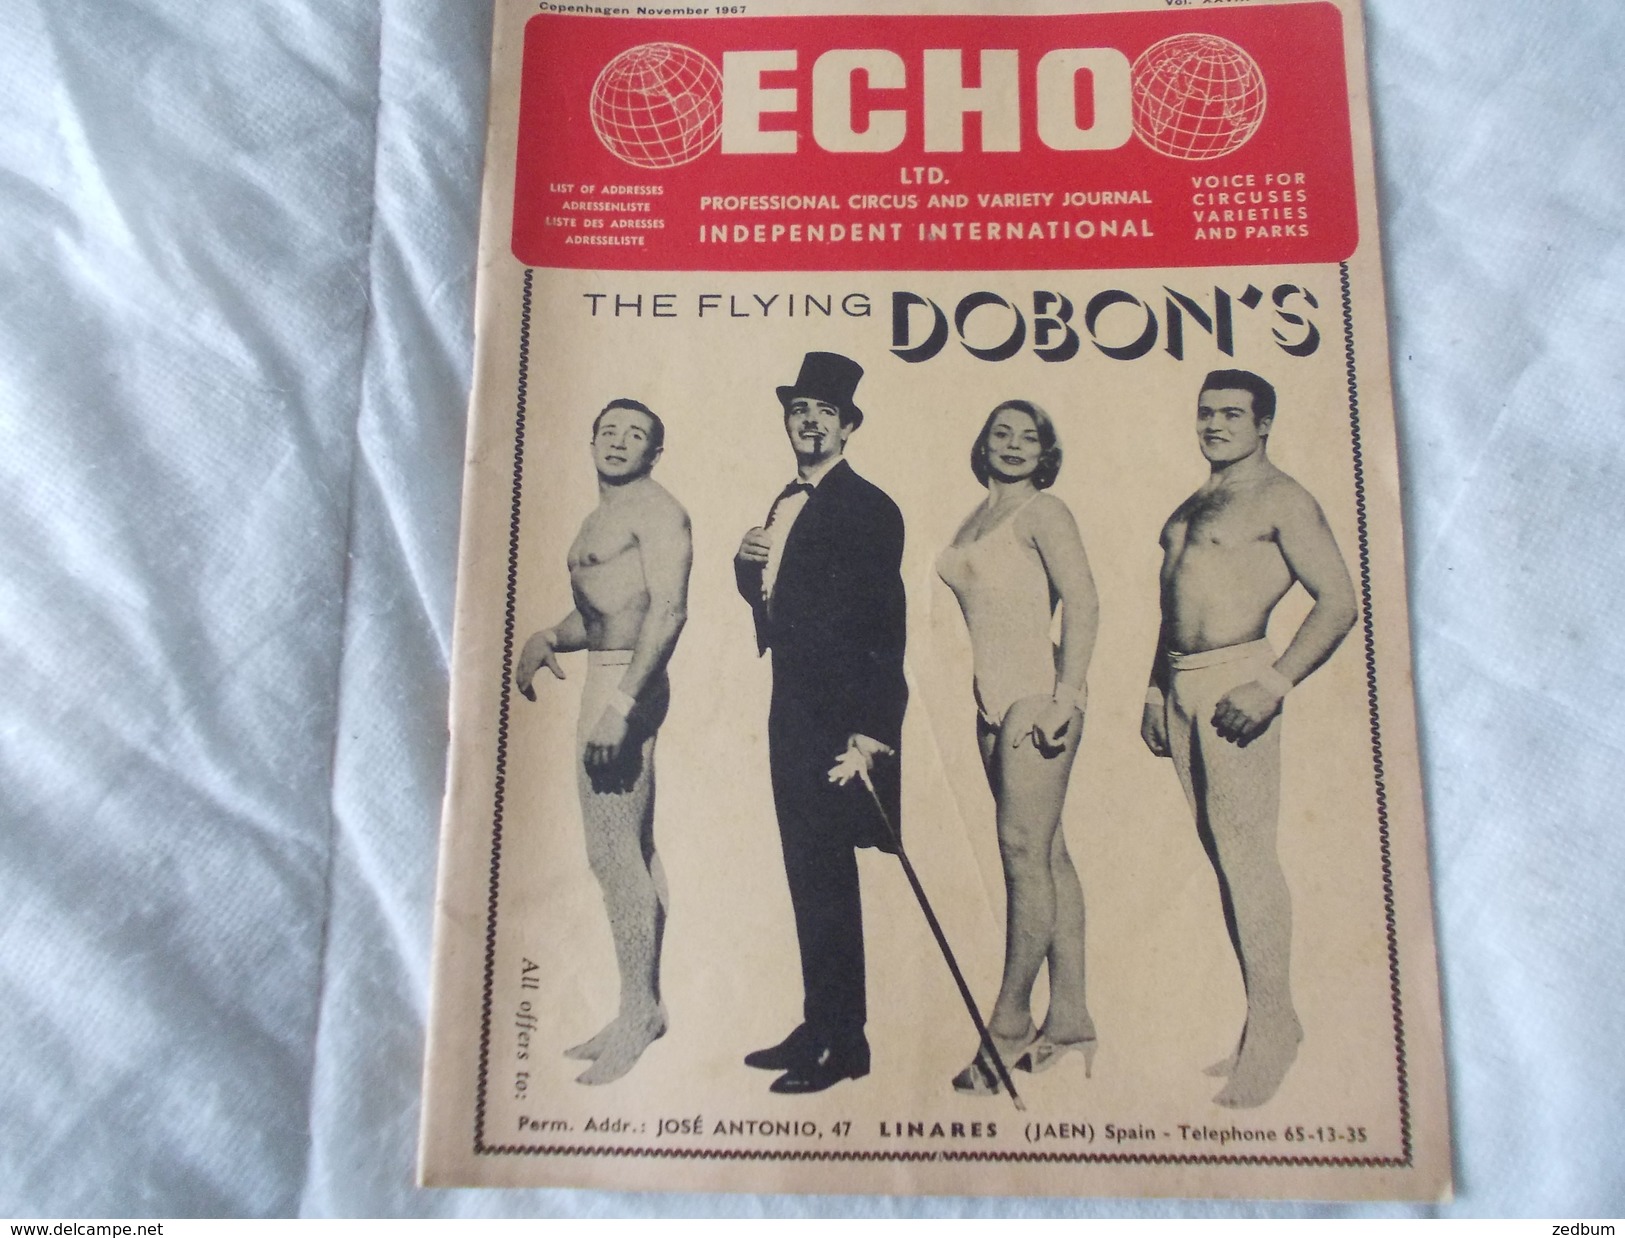 ECHO LTD Professional Circus And Variety Journal Independent International N° 309 November 1967 - Divertissement